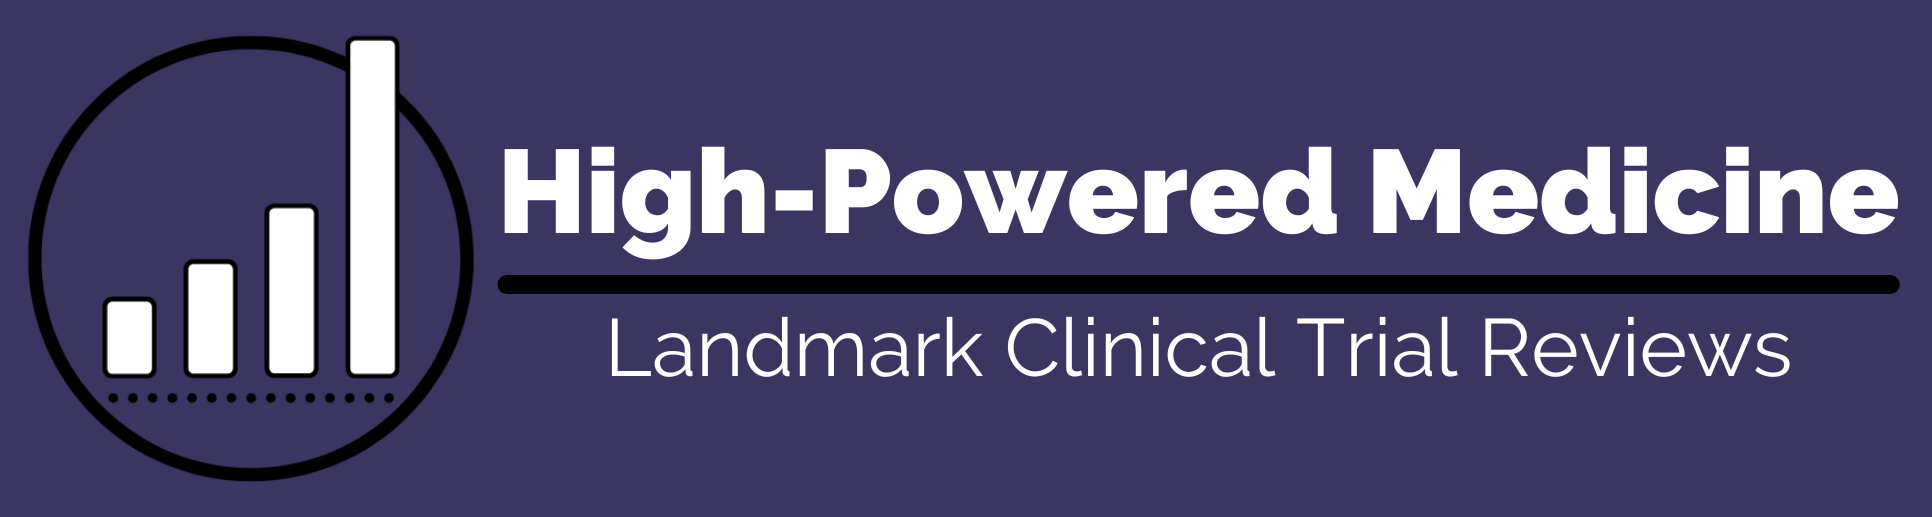 High-Powered Medicine Banner - Logo